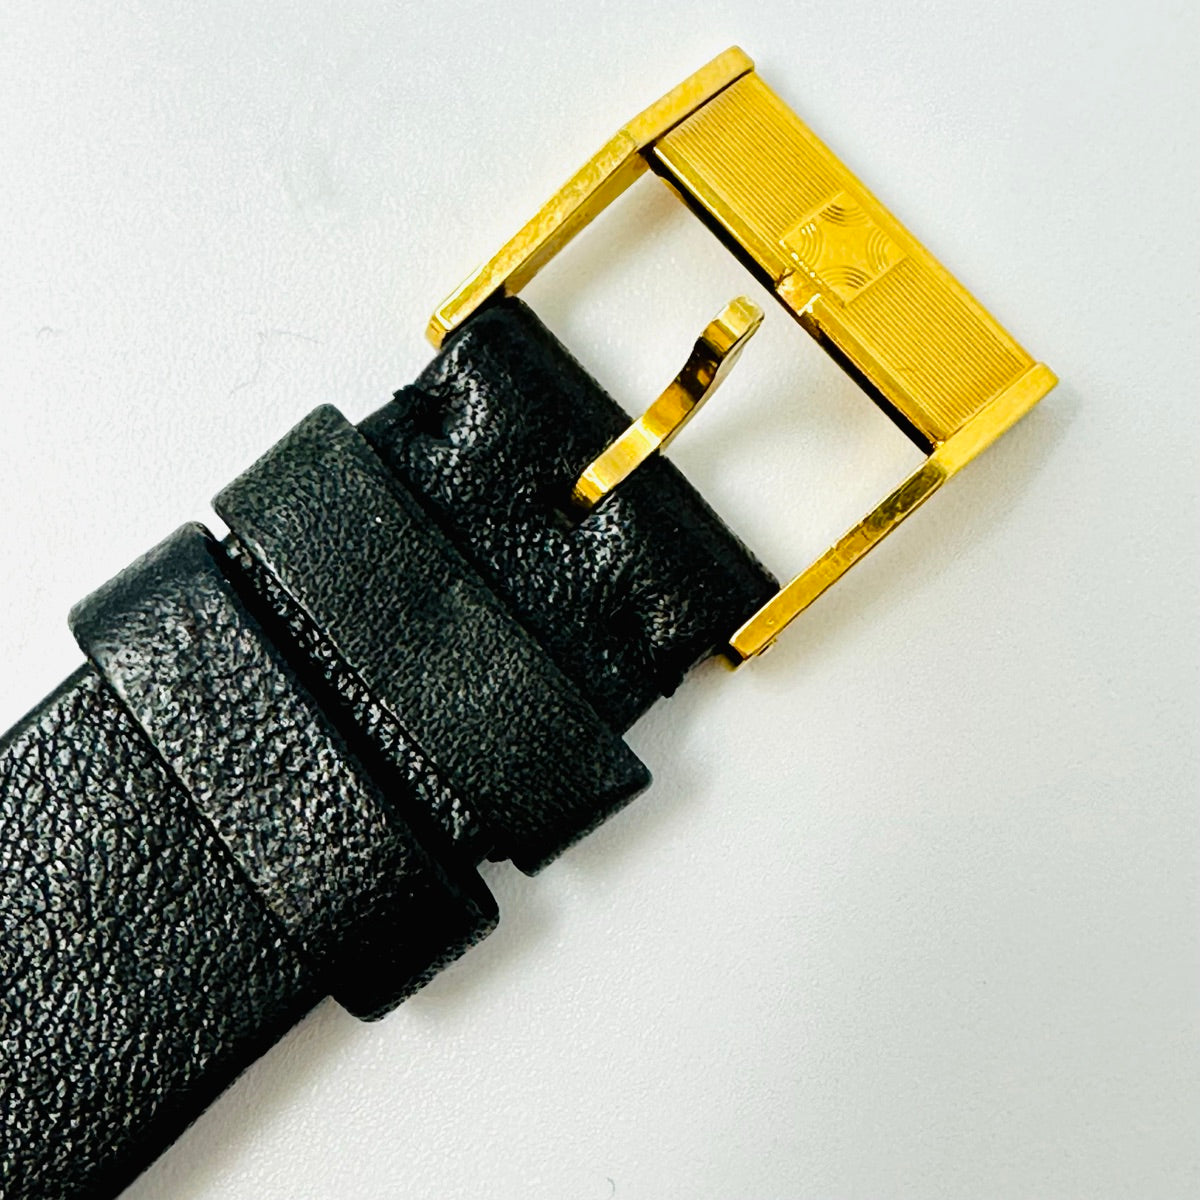 Movado 14K Gold Quartz Watch with Lapis Dial